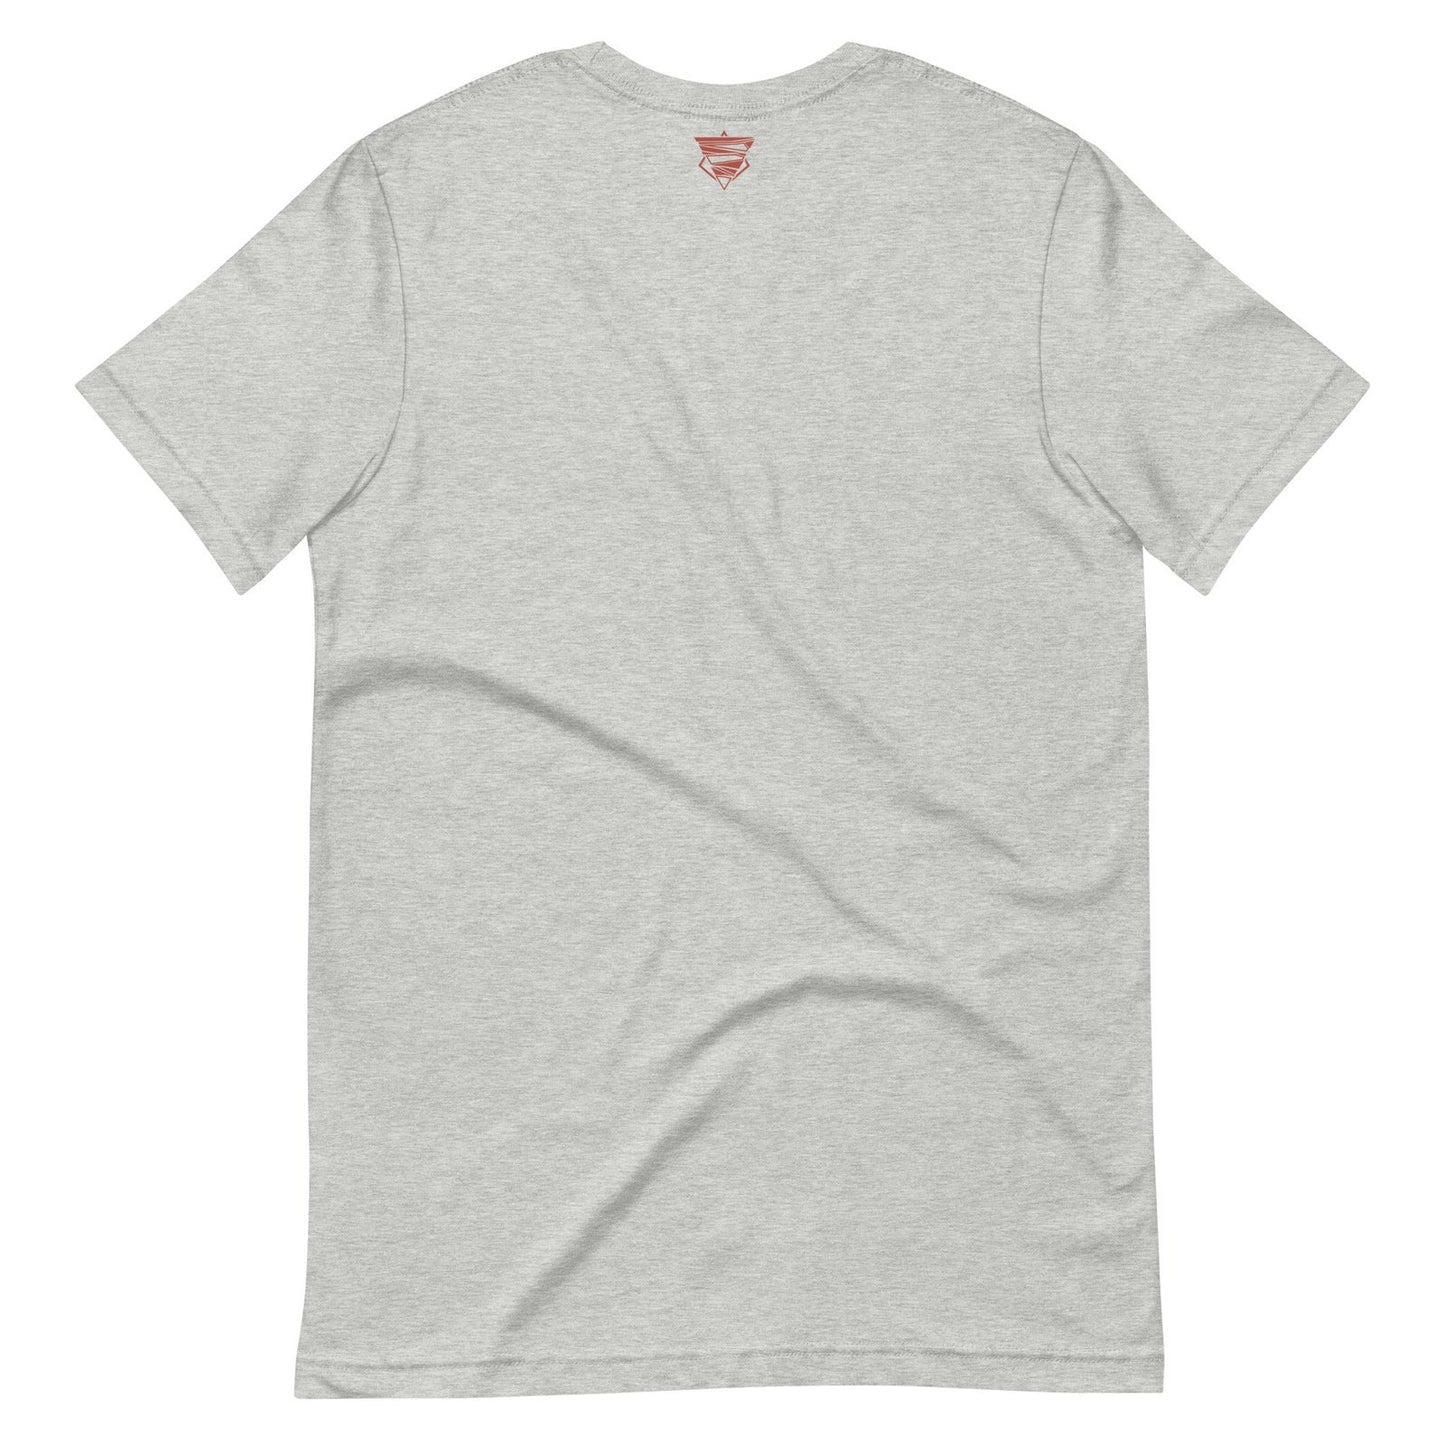 Mountain Arrowhead Unisex T-Shirt